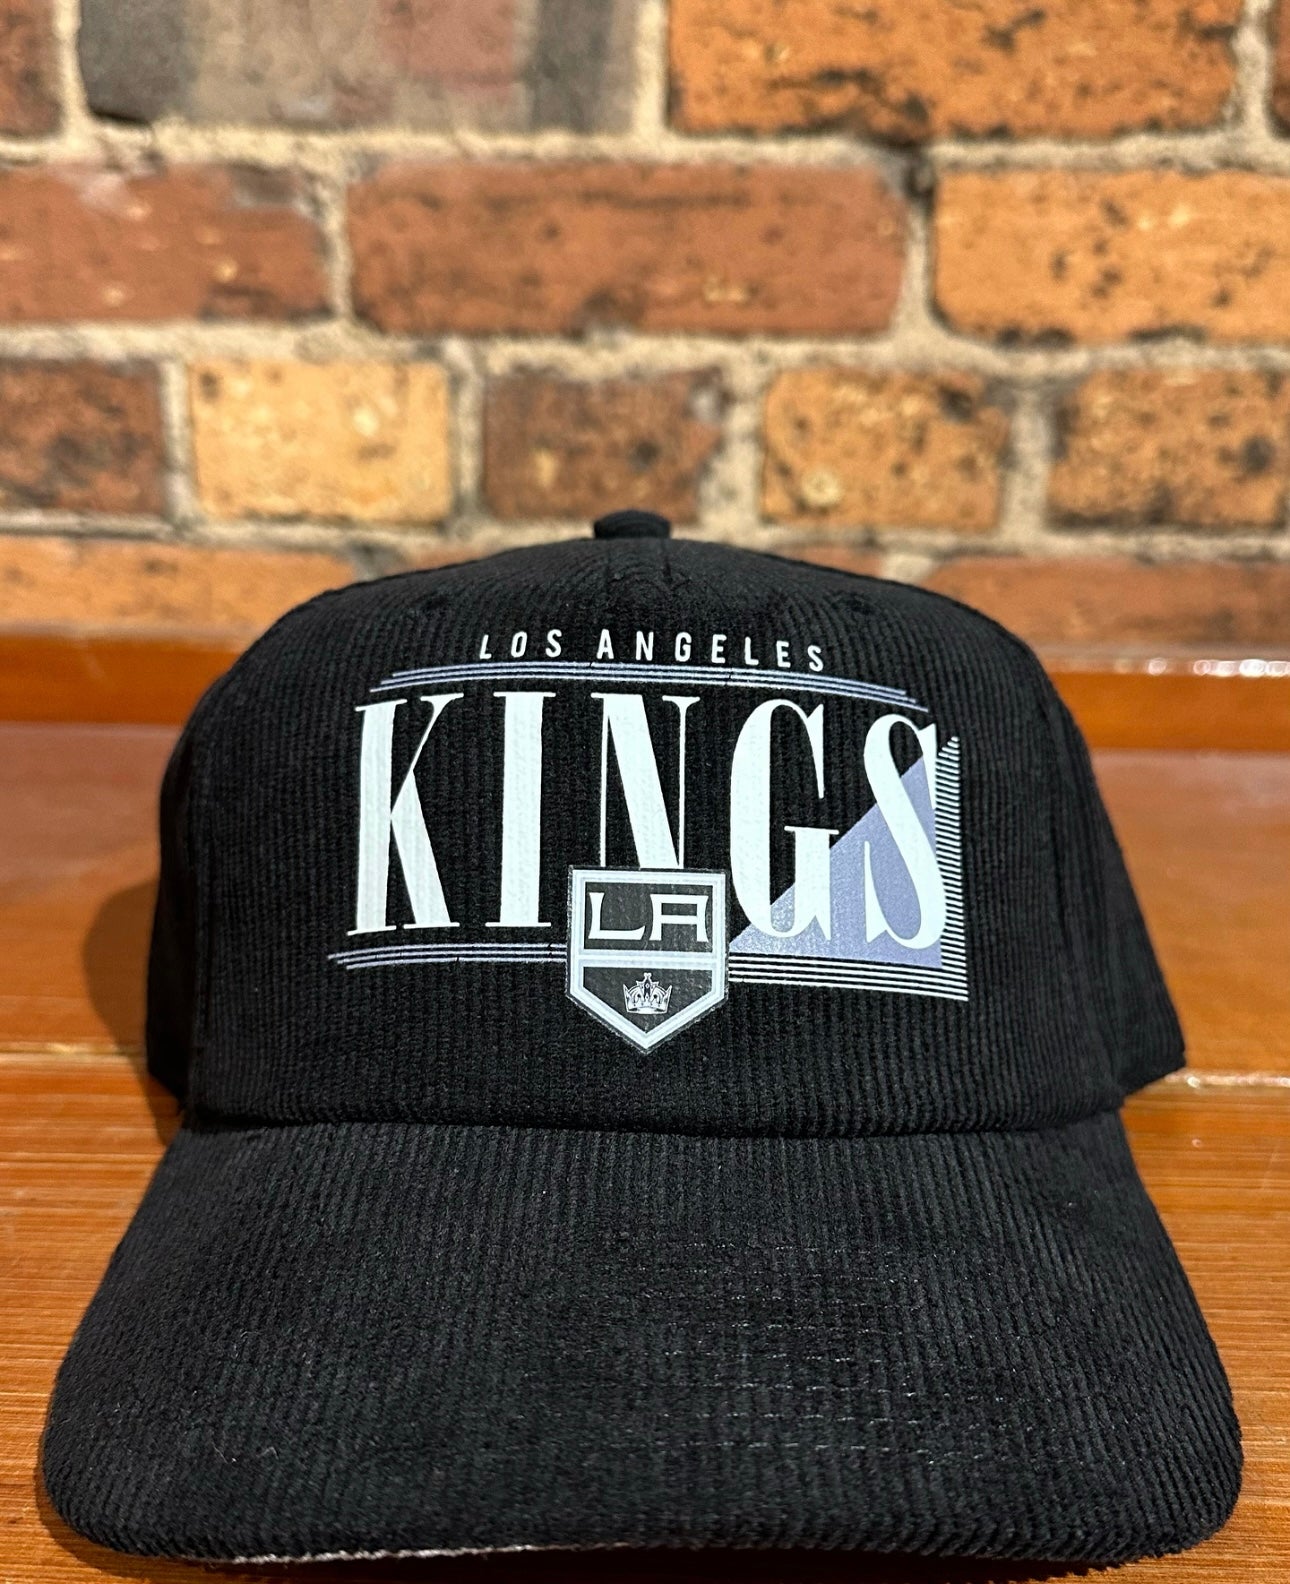 LA Kings Printed Cord Hat - American Needle